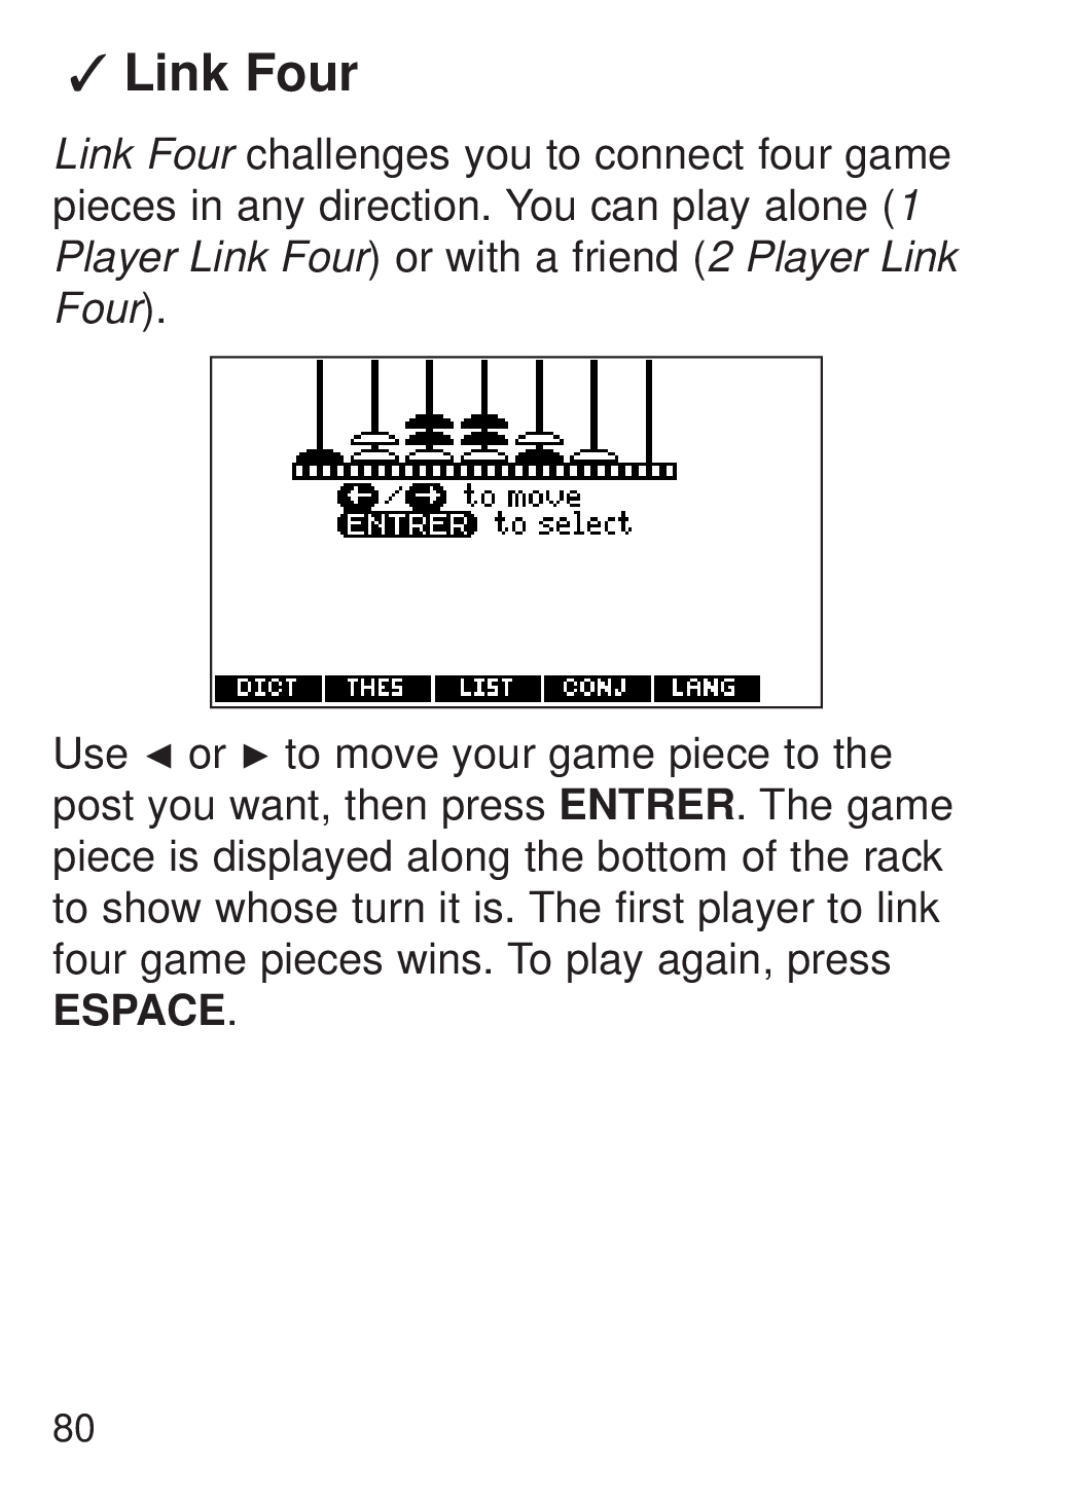 Franklin FQS-1870 manual Link Four 